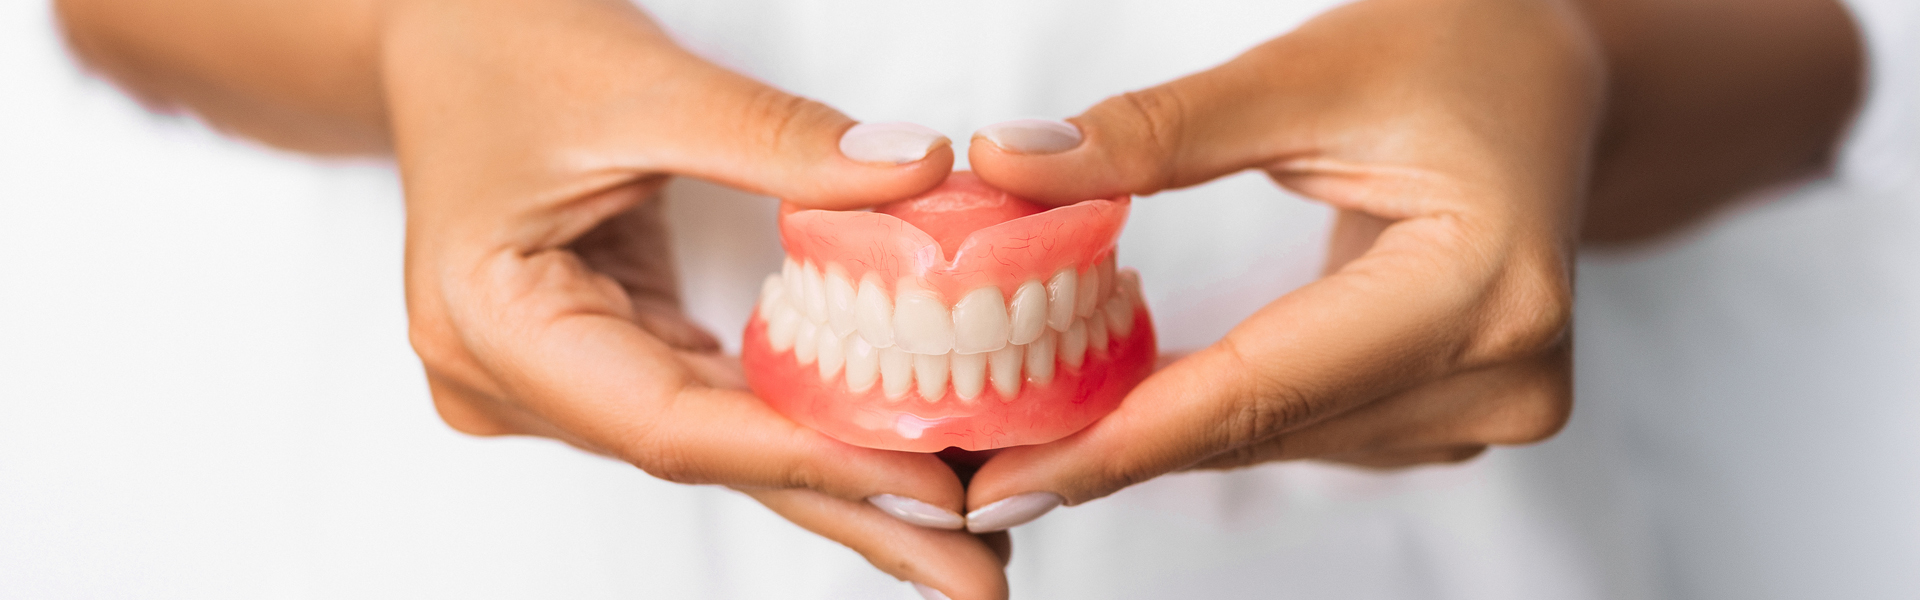 Replacing Missing Teeth With Dentures